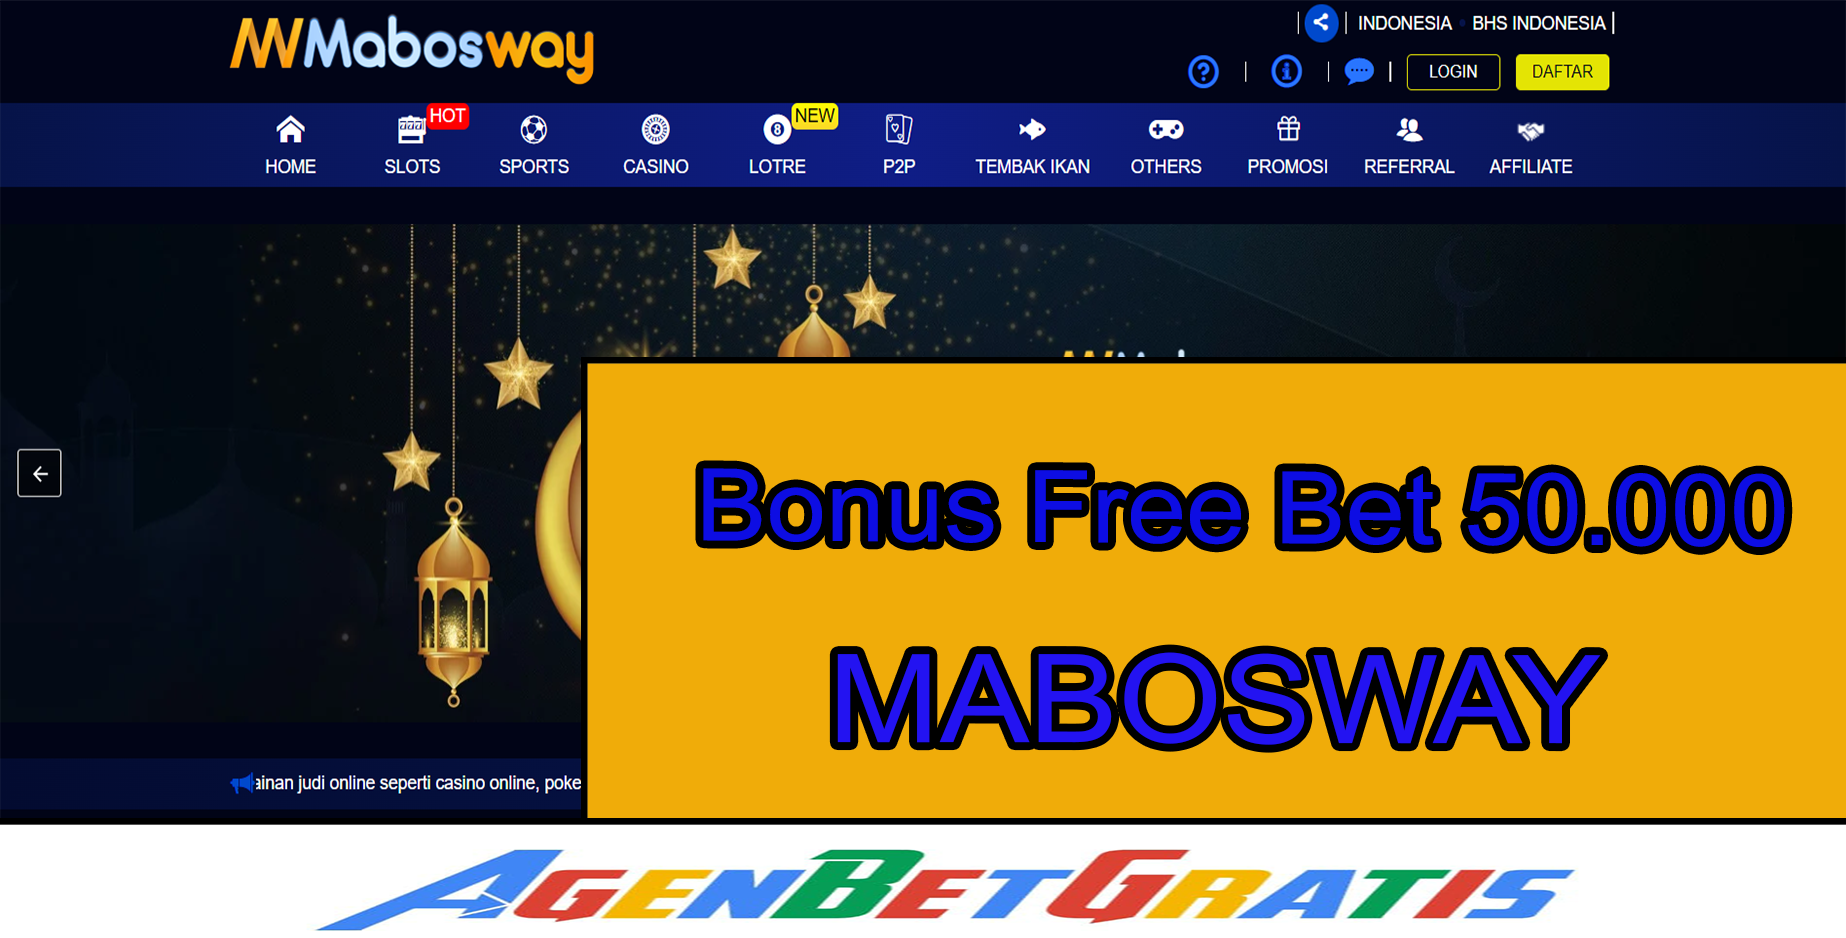 MABOSWAY - Bonus FreeBet 50.000